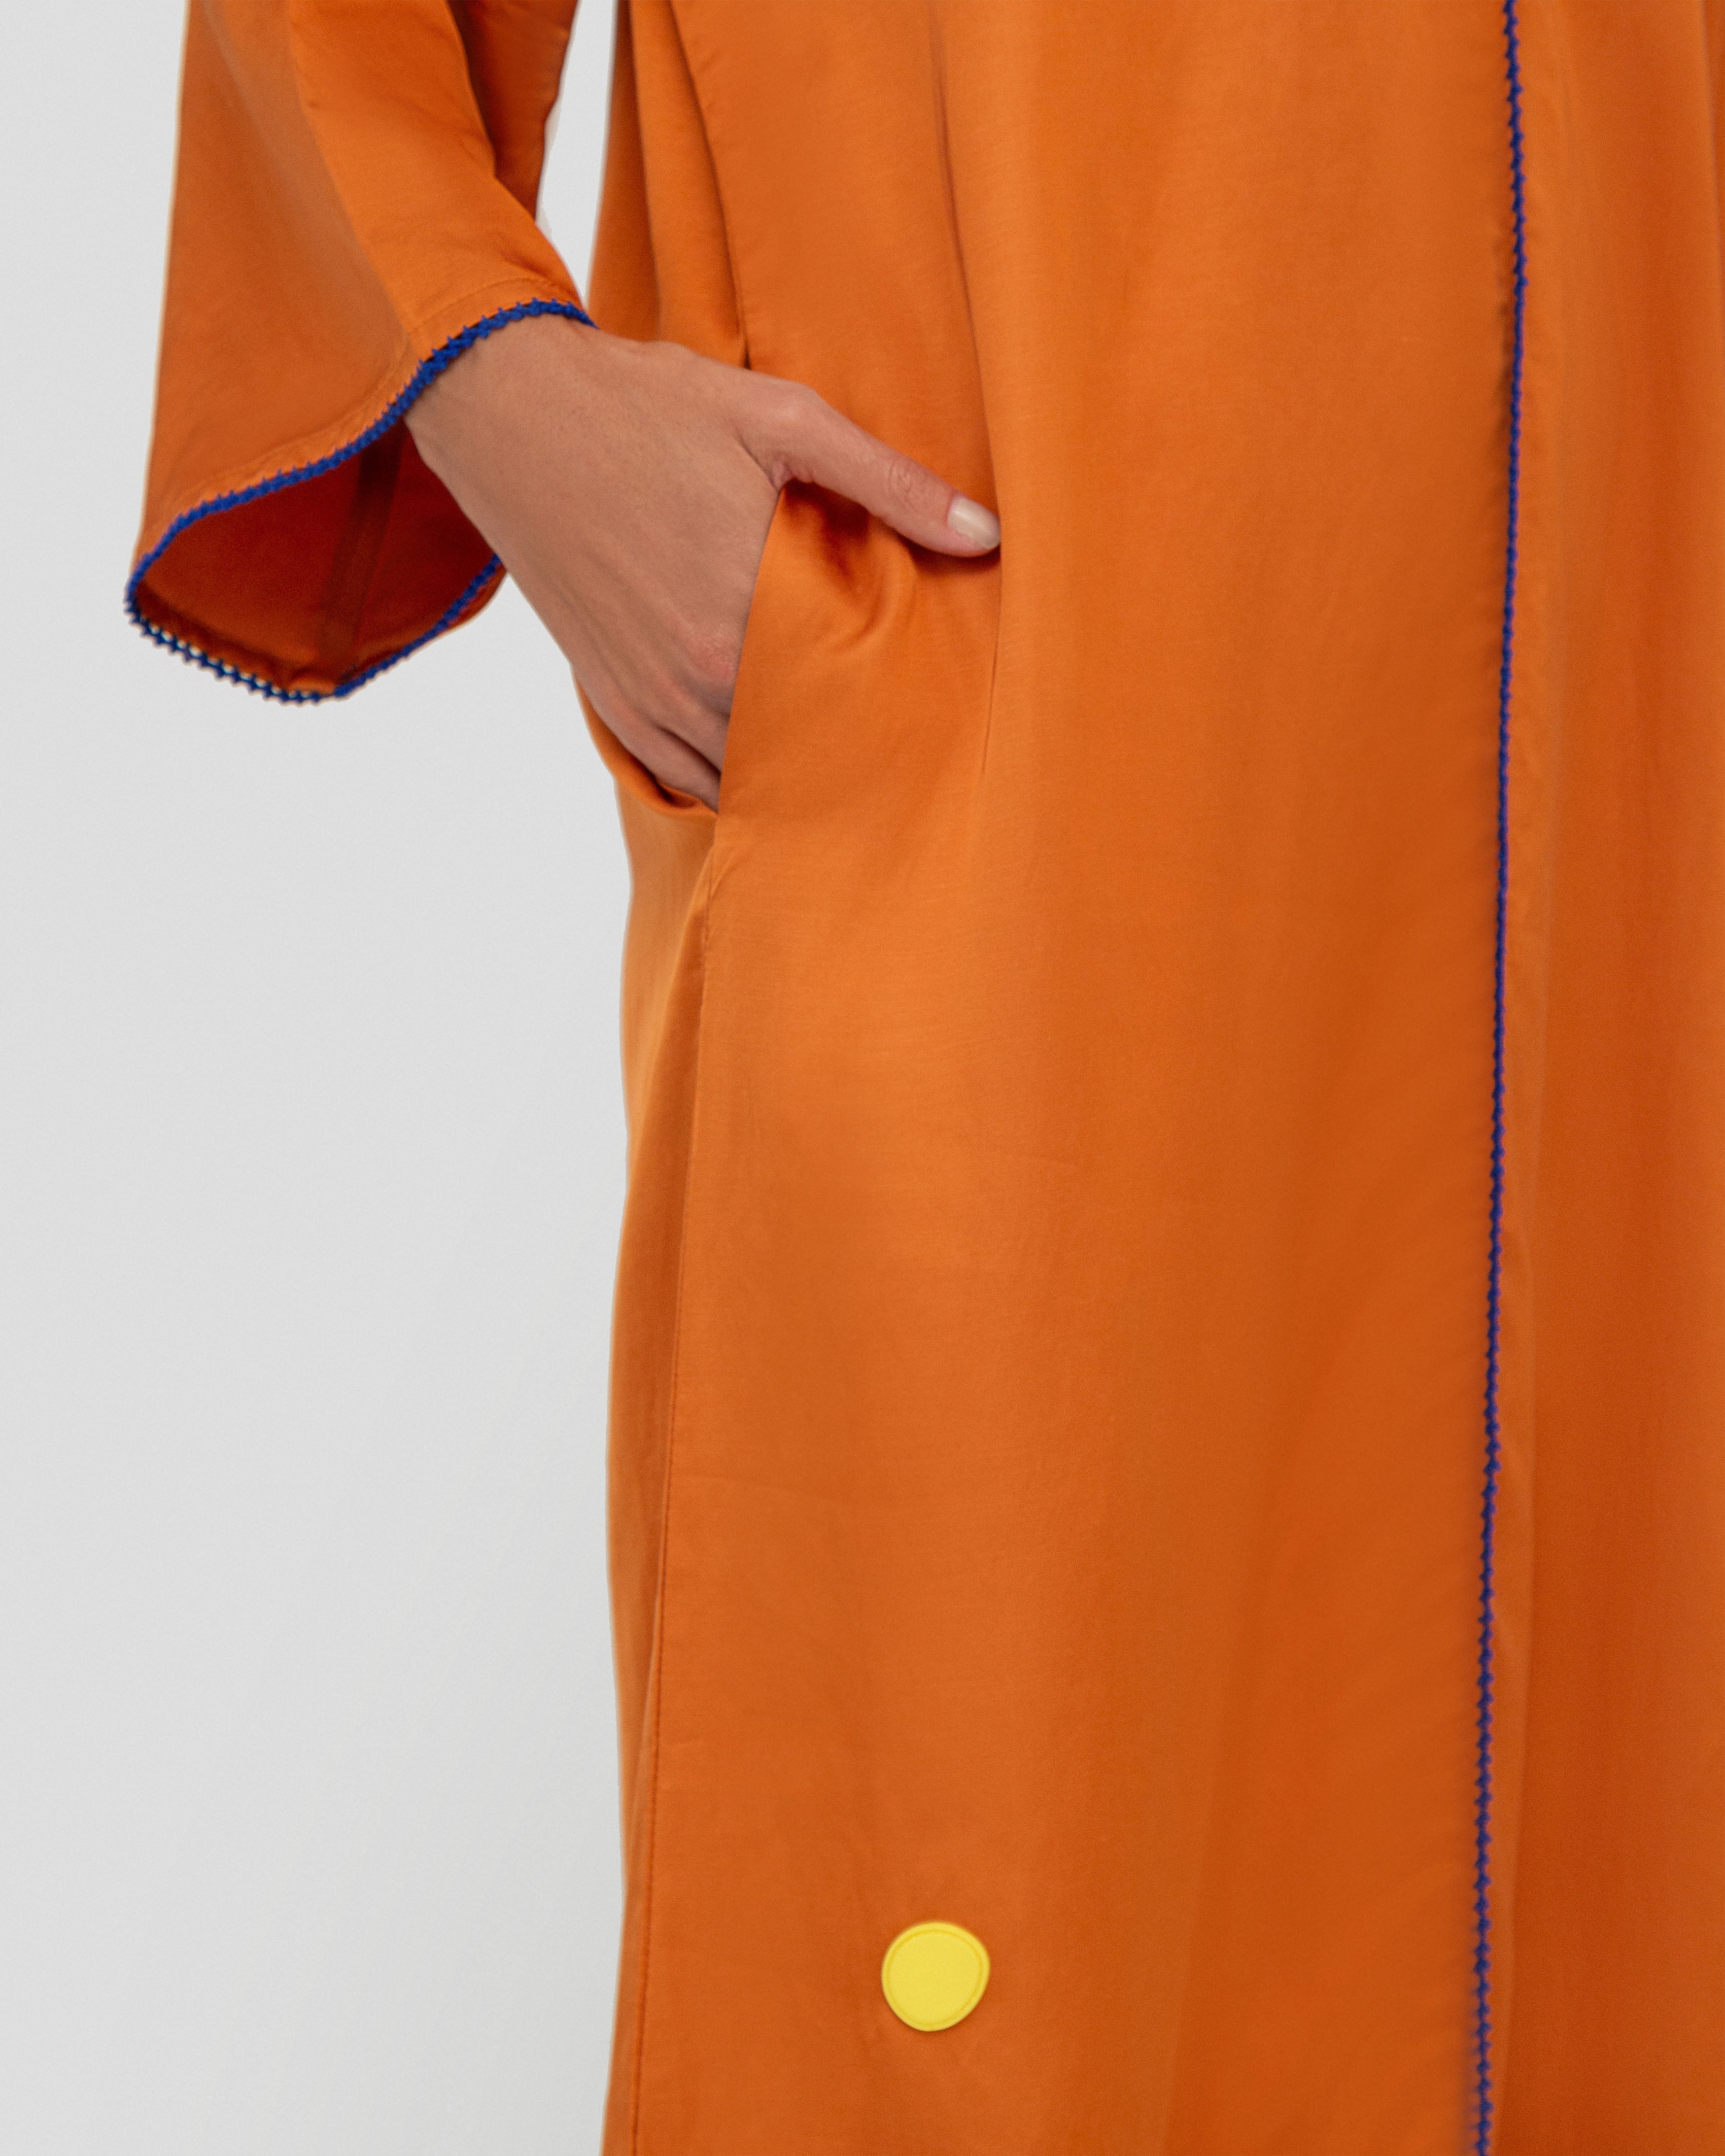 Manel Dress in Rust Orange